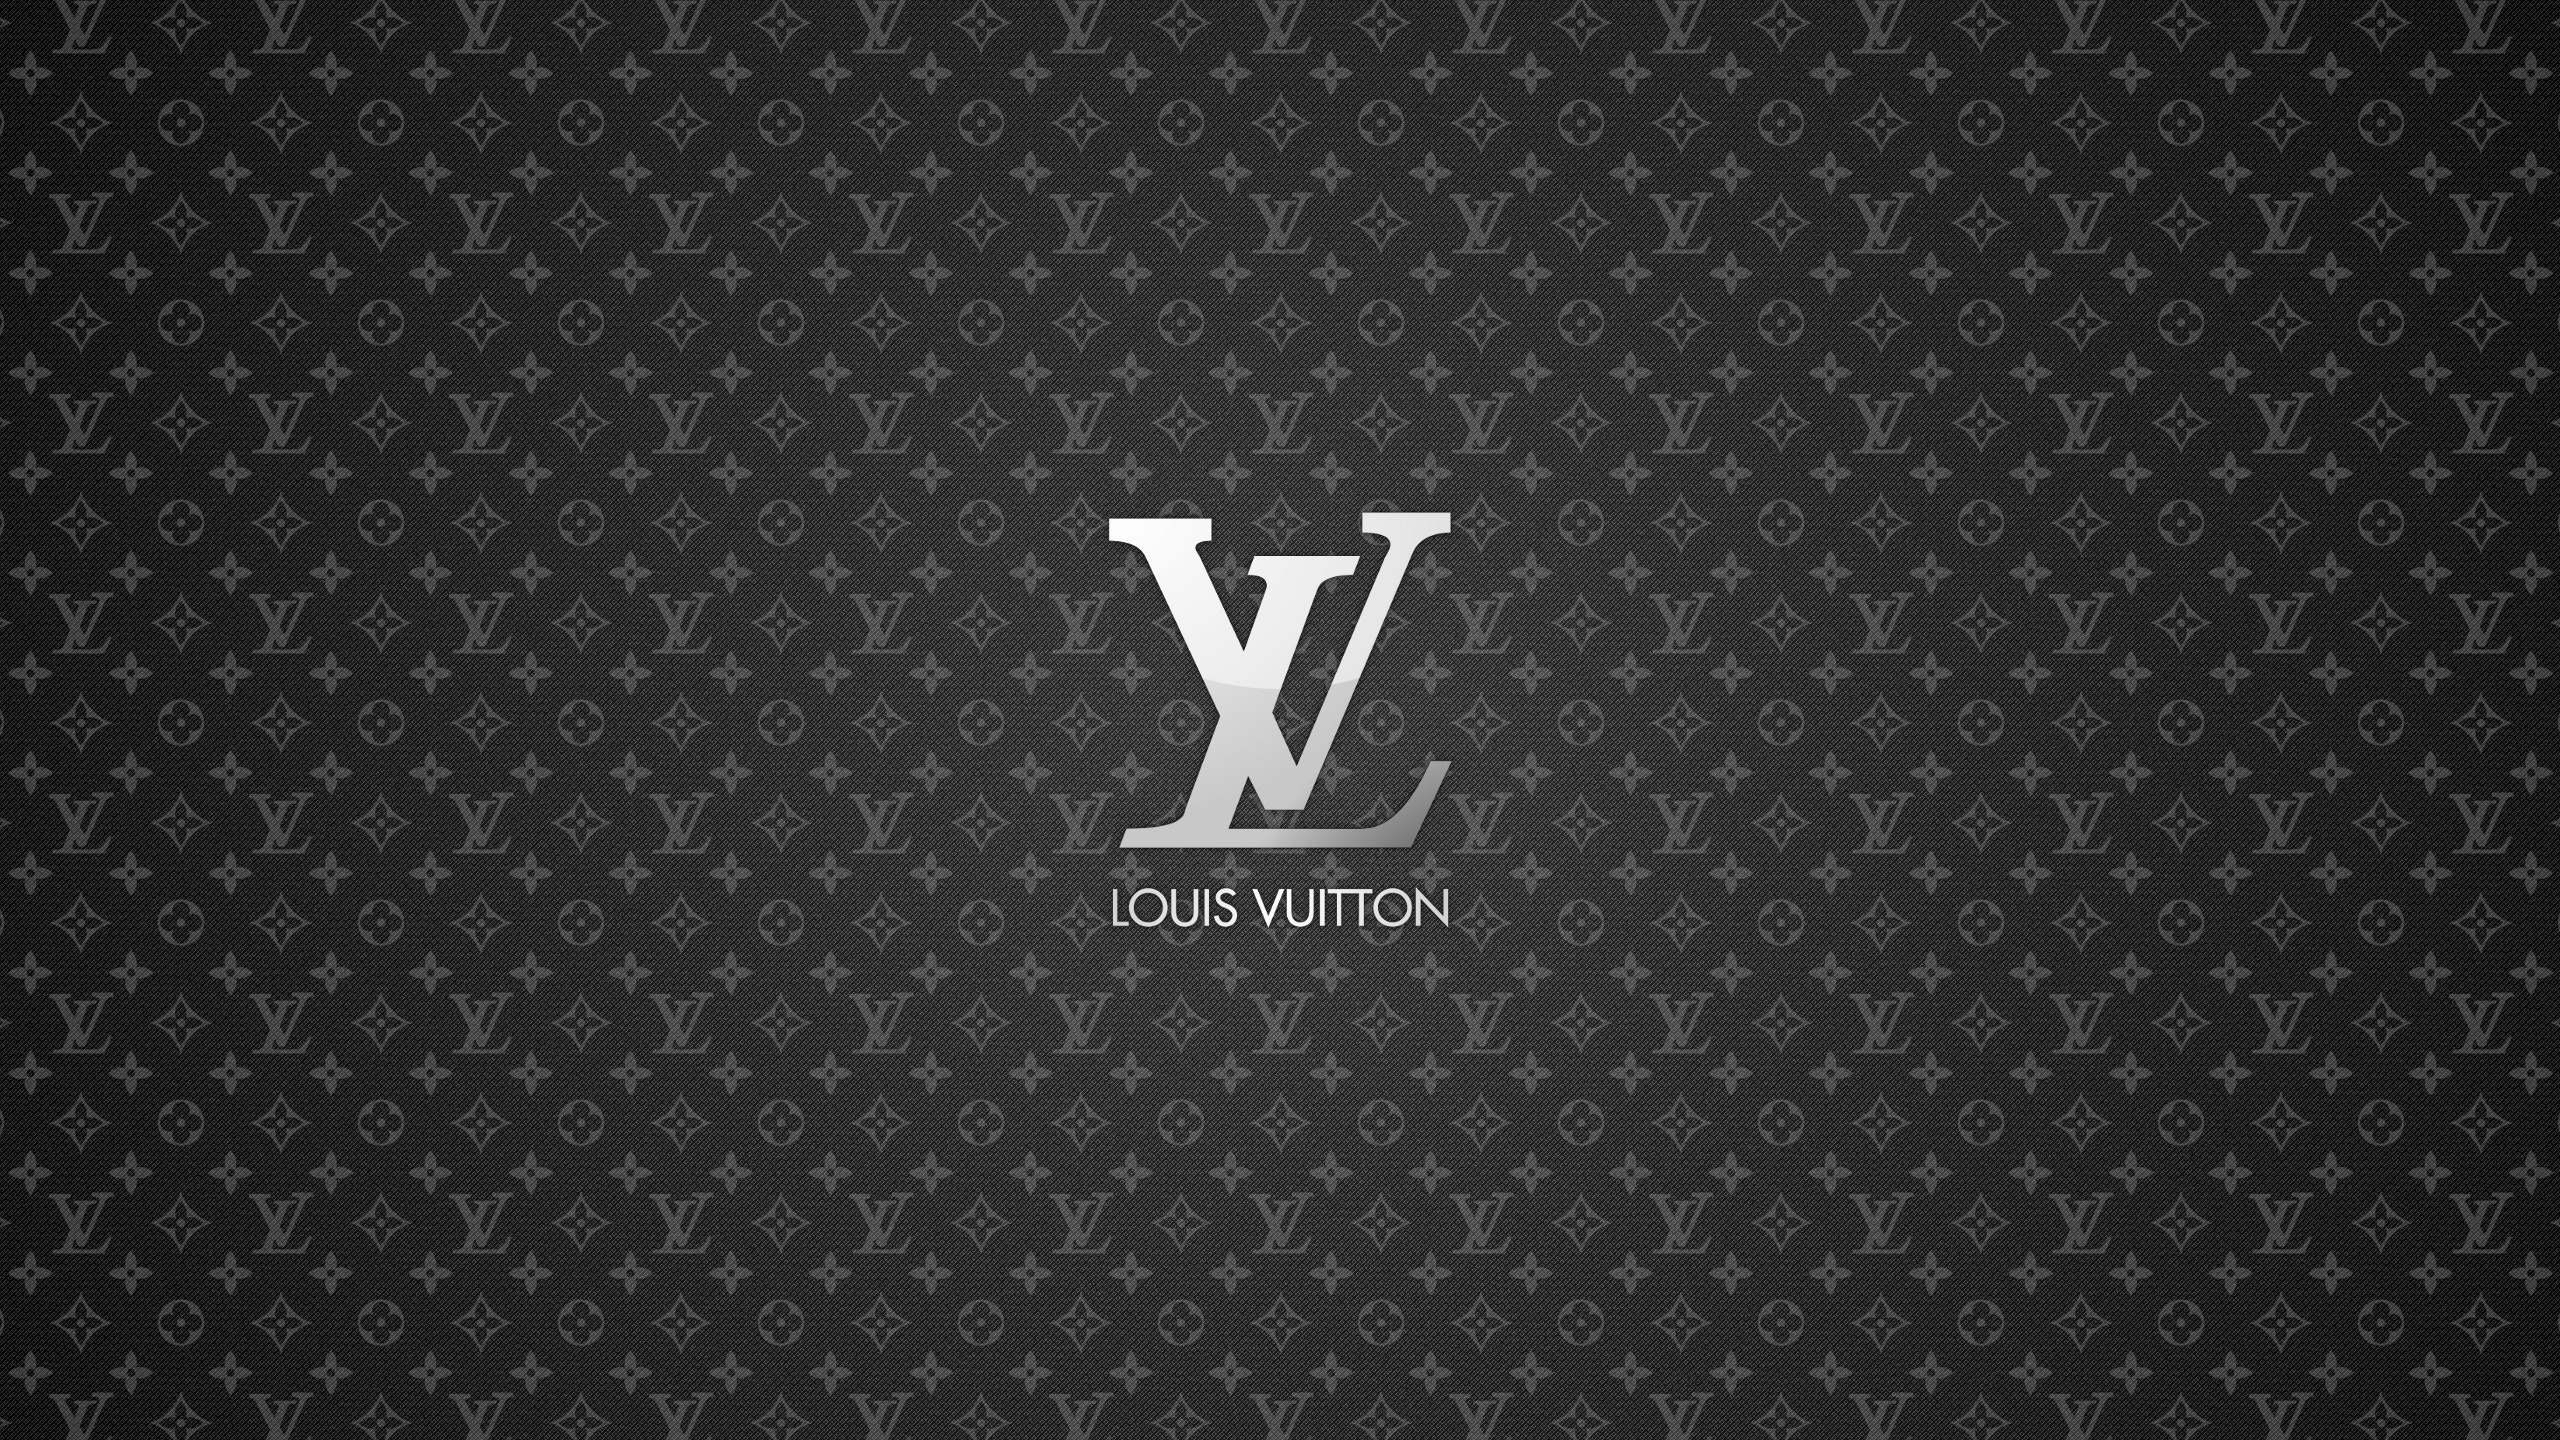 Louis Vuitton for 2560x1440 HDTV resolution